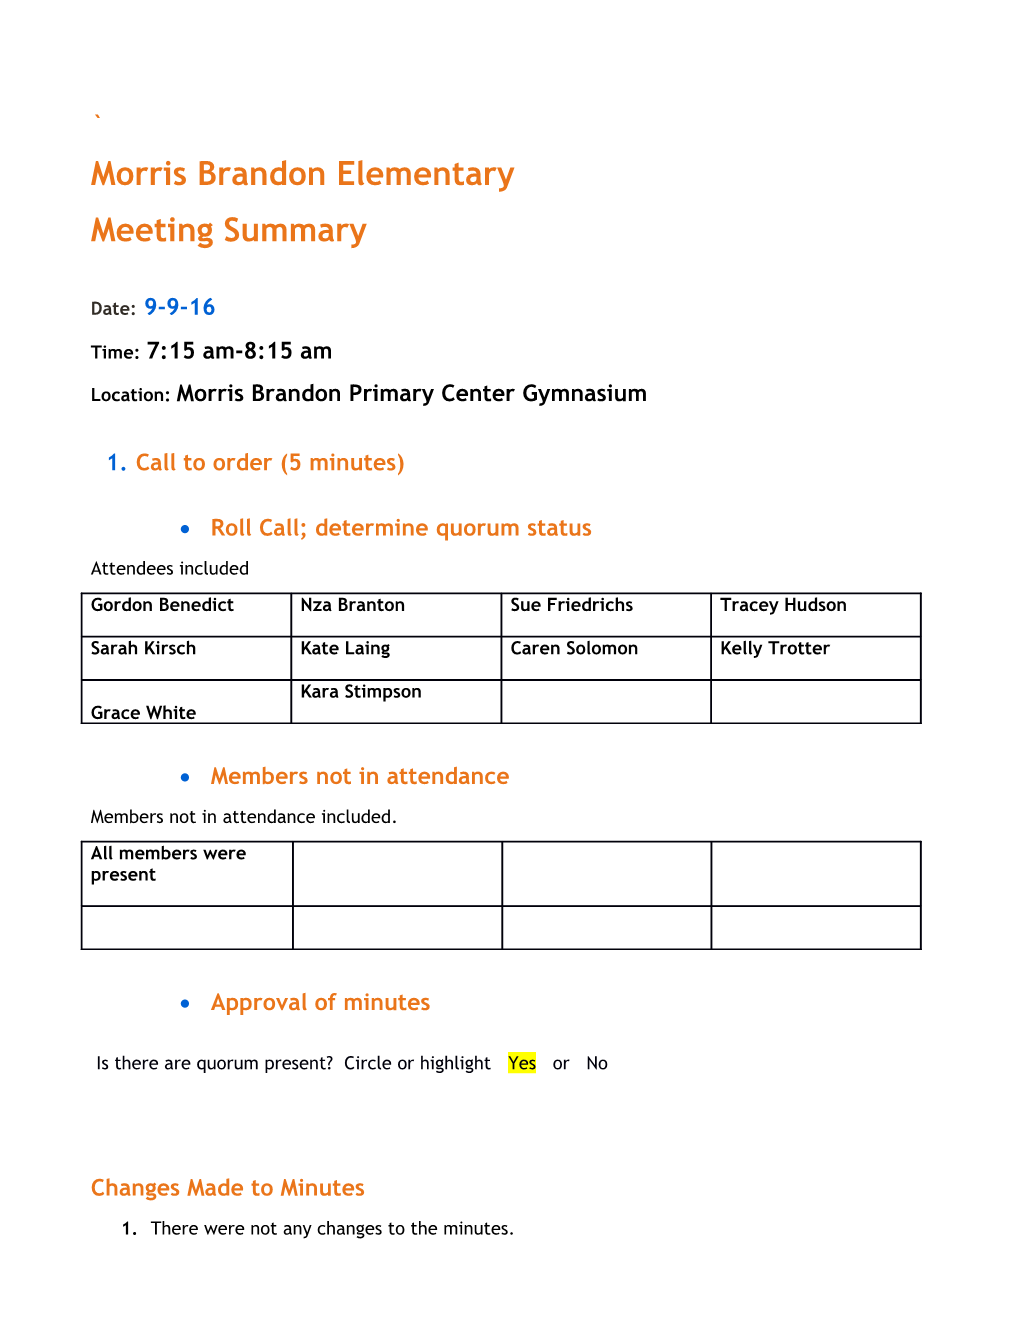 Location:Morris Brandon Primary Center Gymnasium